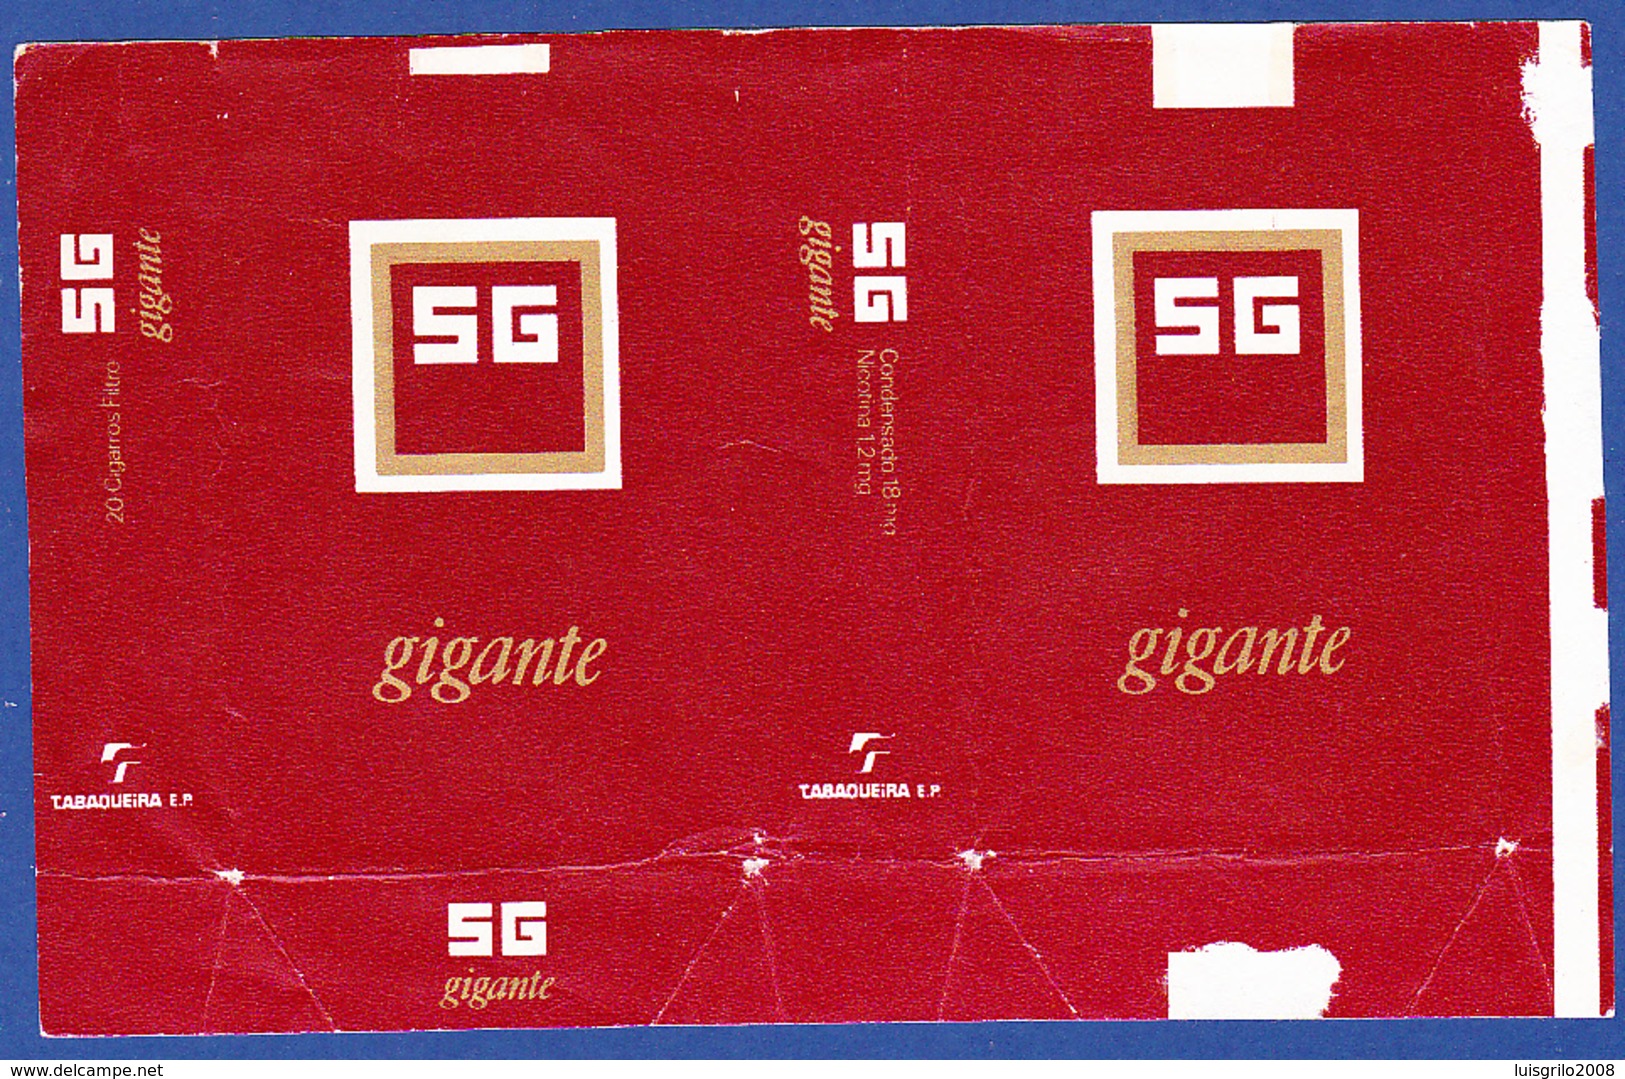 Portugal 1960 To 1970, Packet Of Cigarettes - SG Gigante / A Tabaqueira, Lisboa - Etuis à Cigarettes Vides